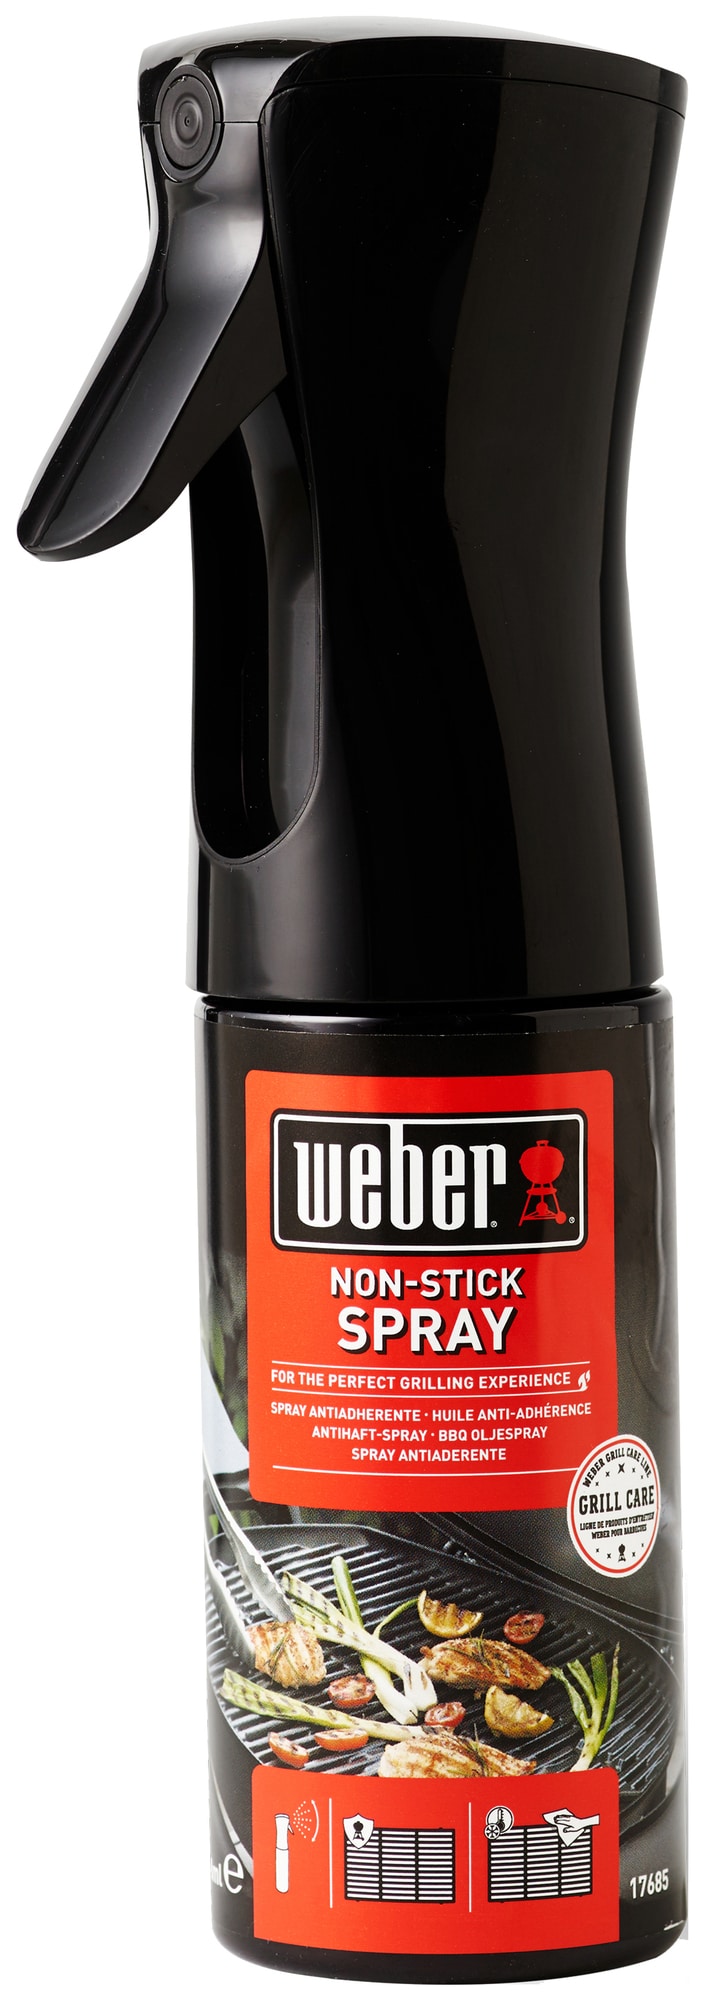 Se Weber Non-stick spray 17685 hos Elgiganten